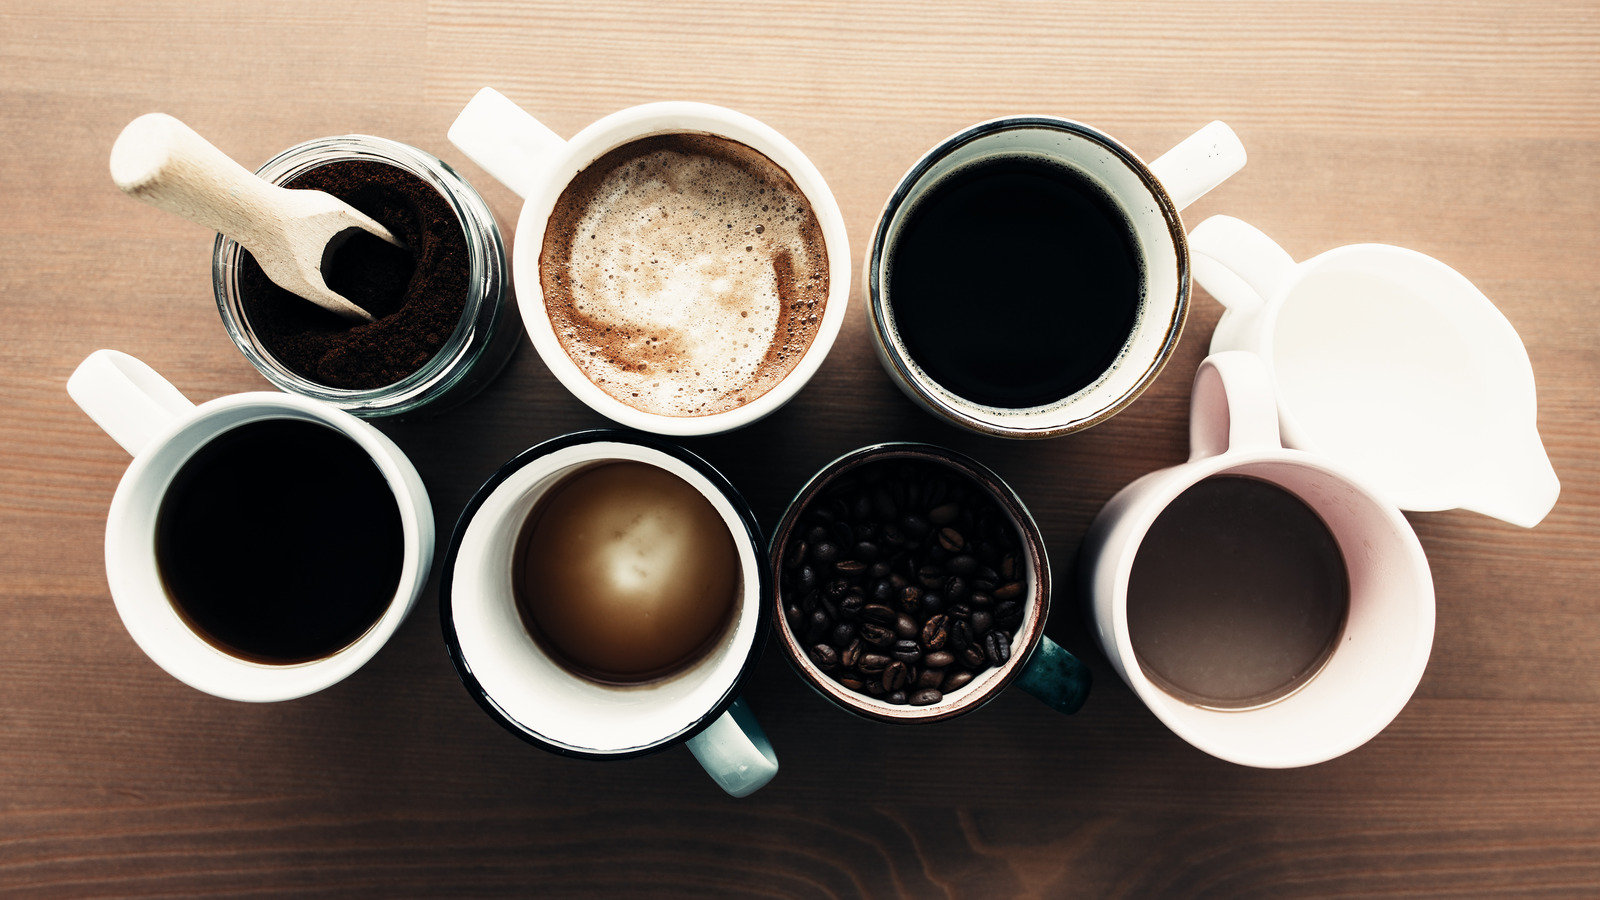 Starbucks Nespresso Pods Variety Pack Review - Part 2  House Blend,  Verona, Sumatra, Espresso Roast 